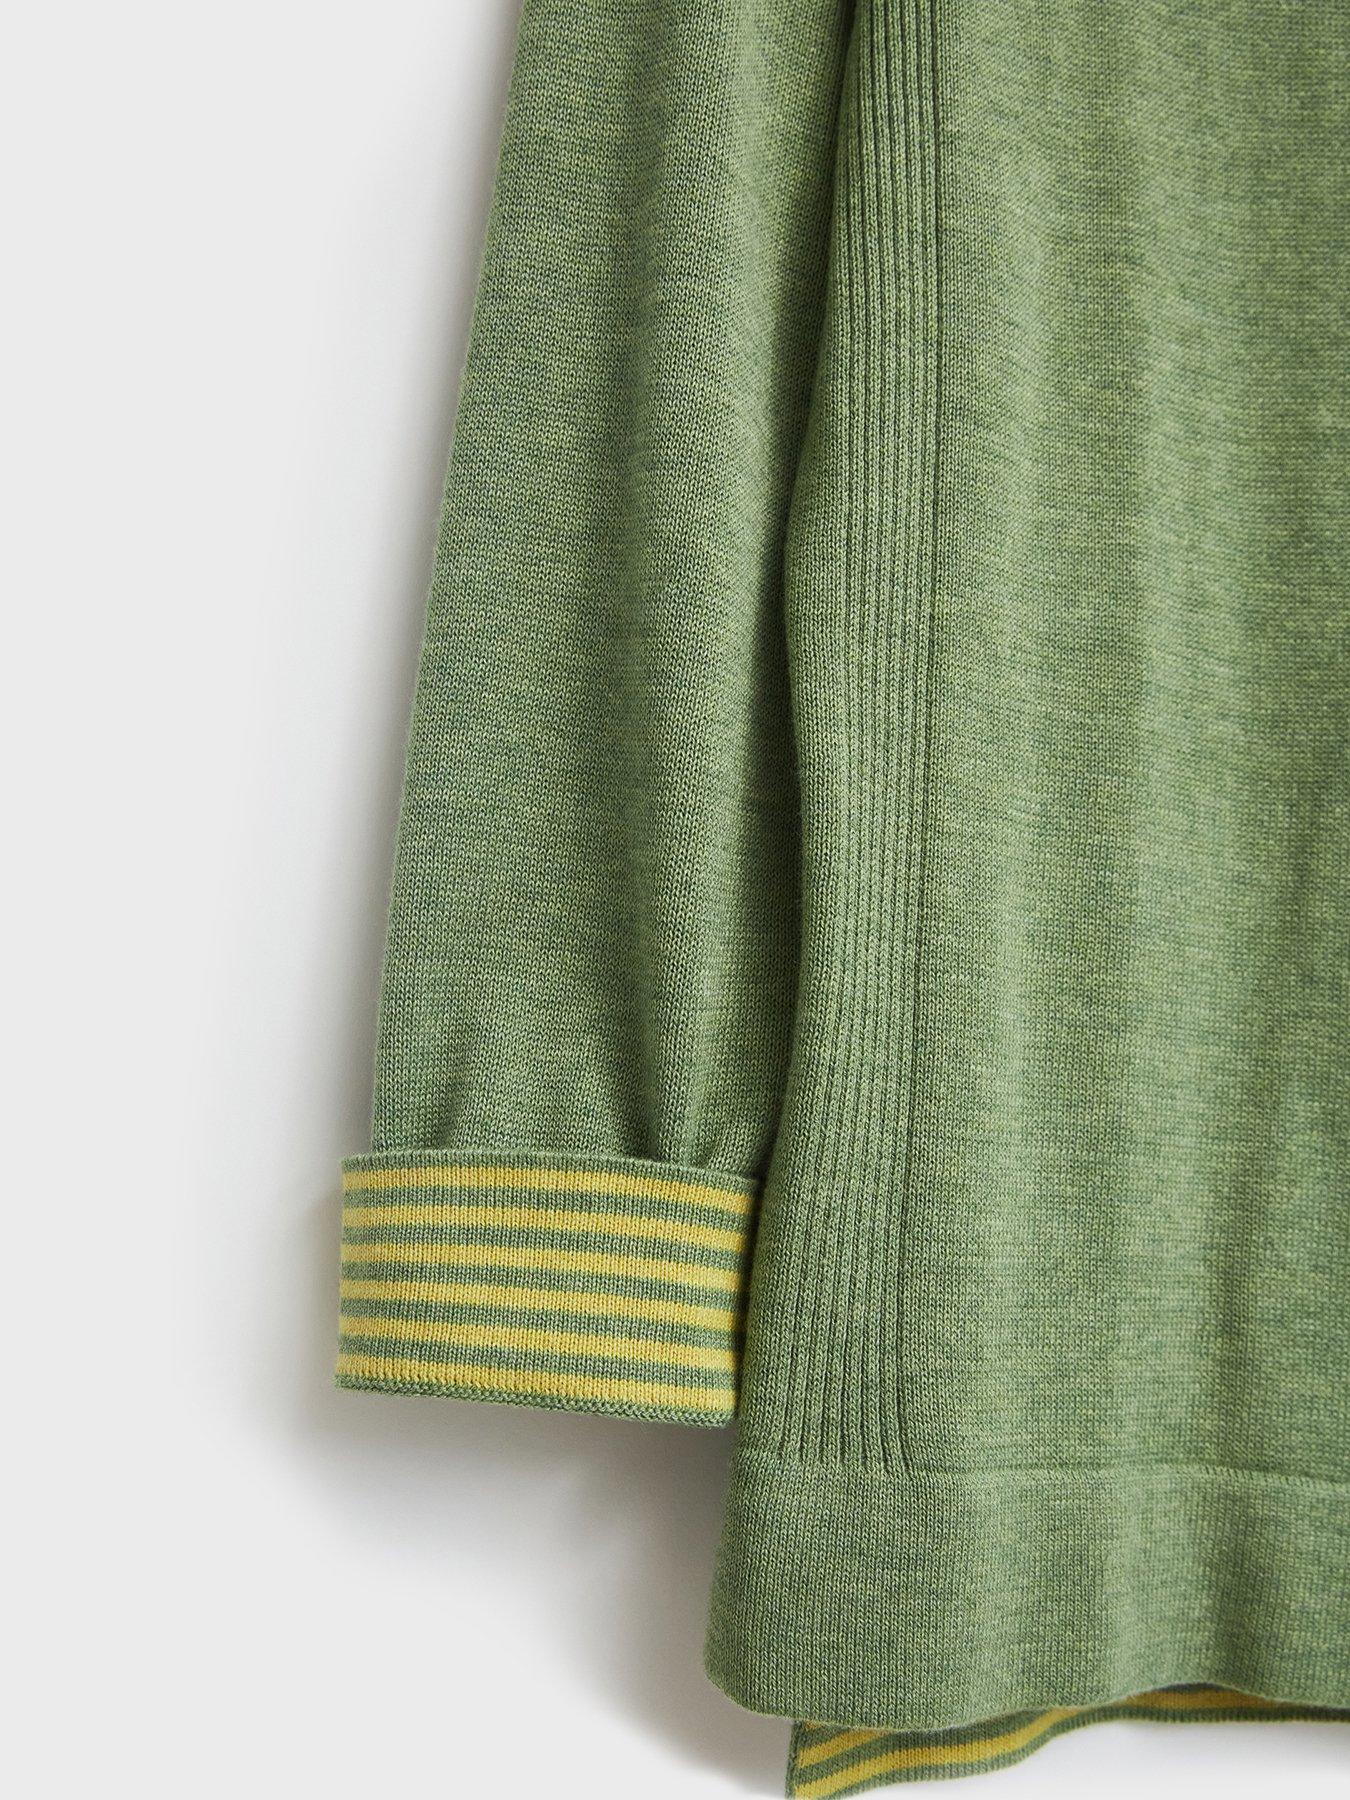 Knitwear Olivia Jumper - Green